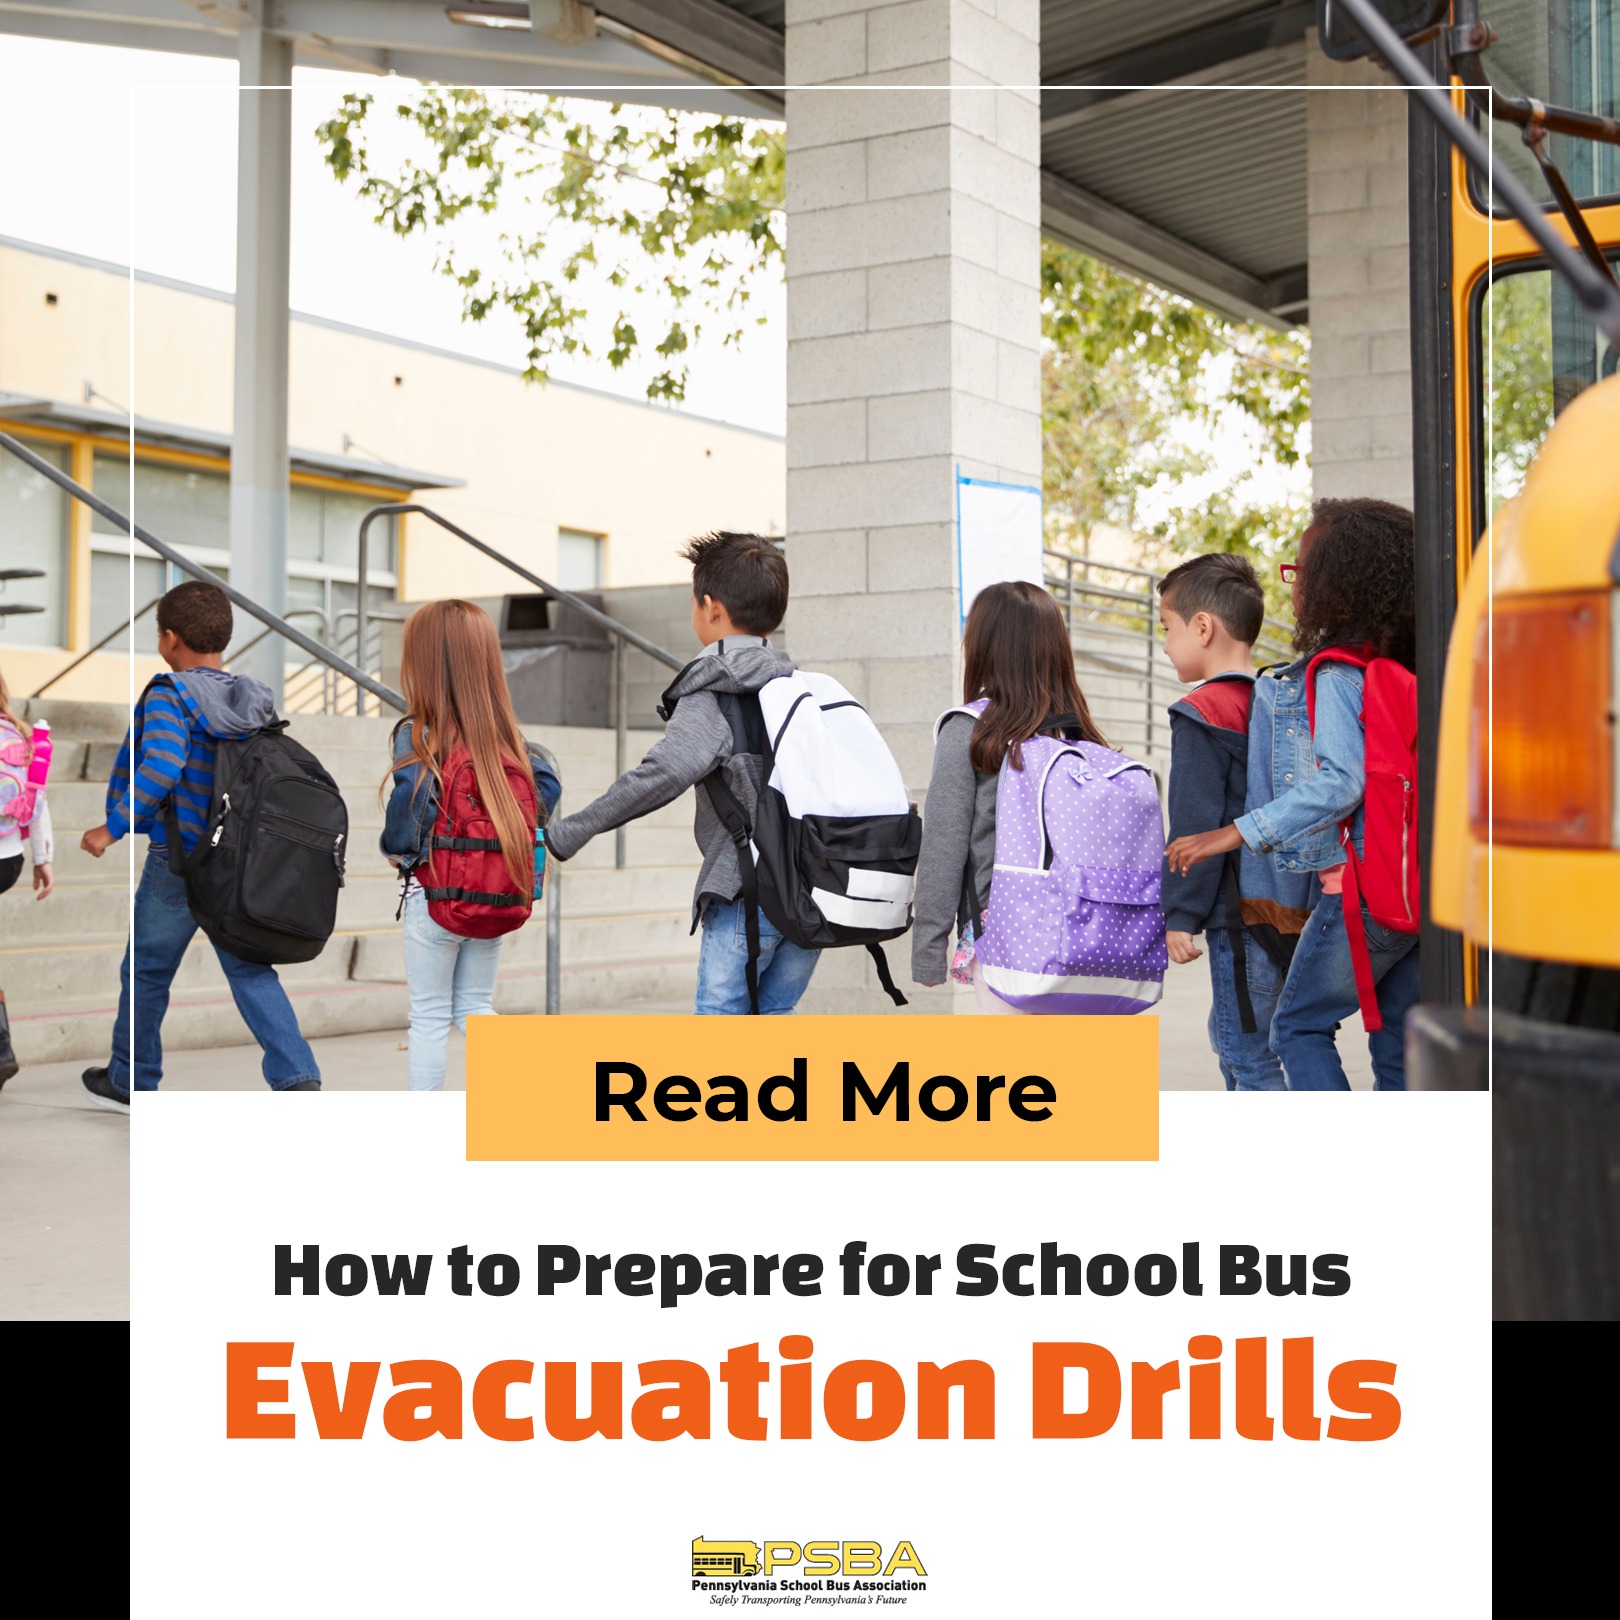 How to Prepare for School Bus Evacuation Drills